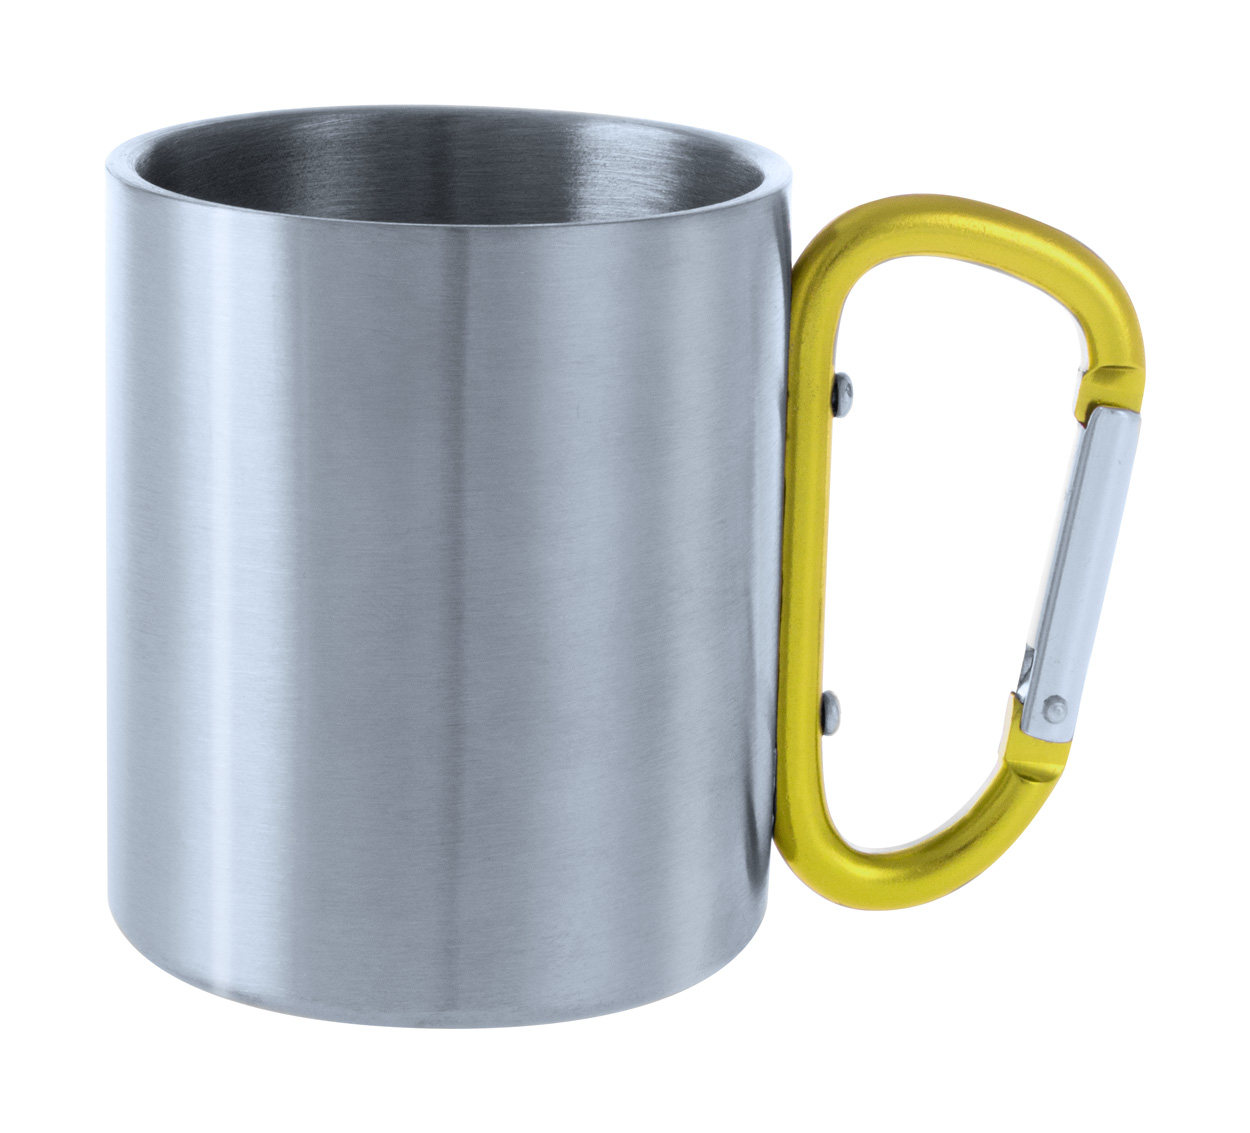 Bastic stainless steel mug